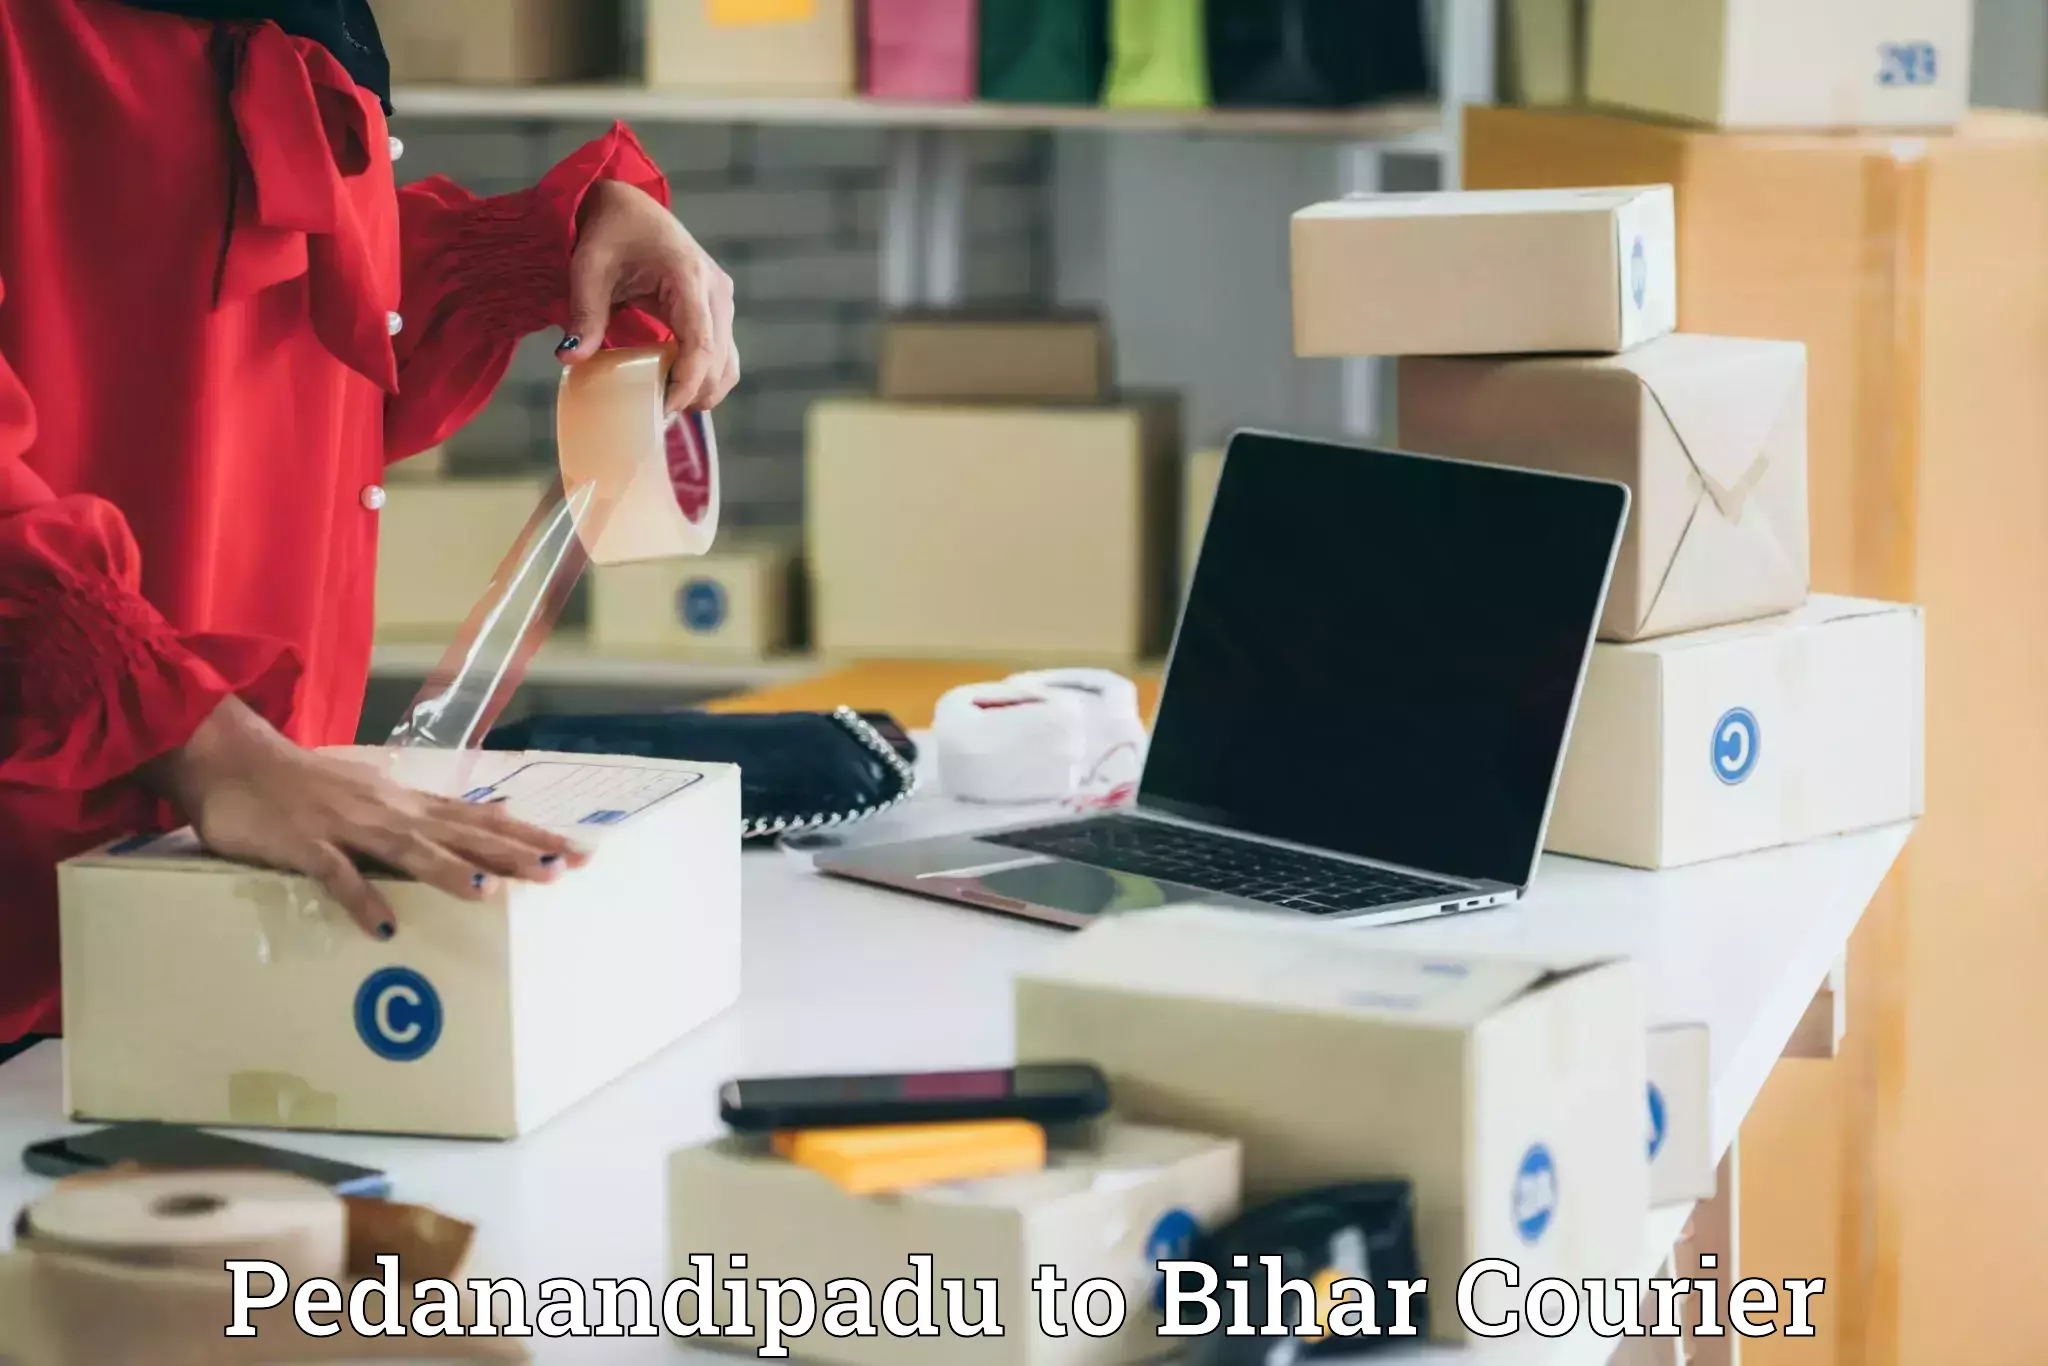 Bulk courier orders Pedanandipadu to Bihar